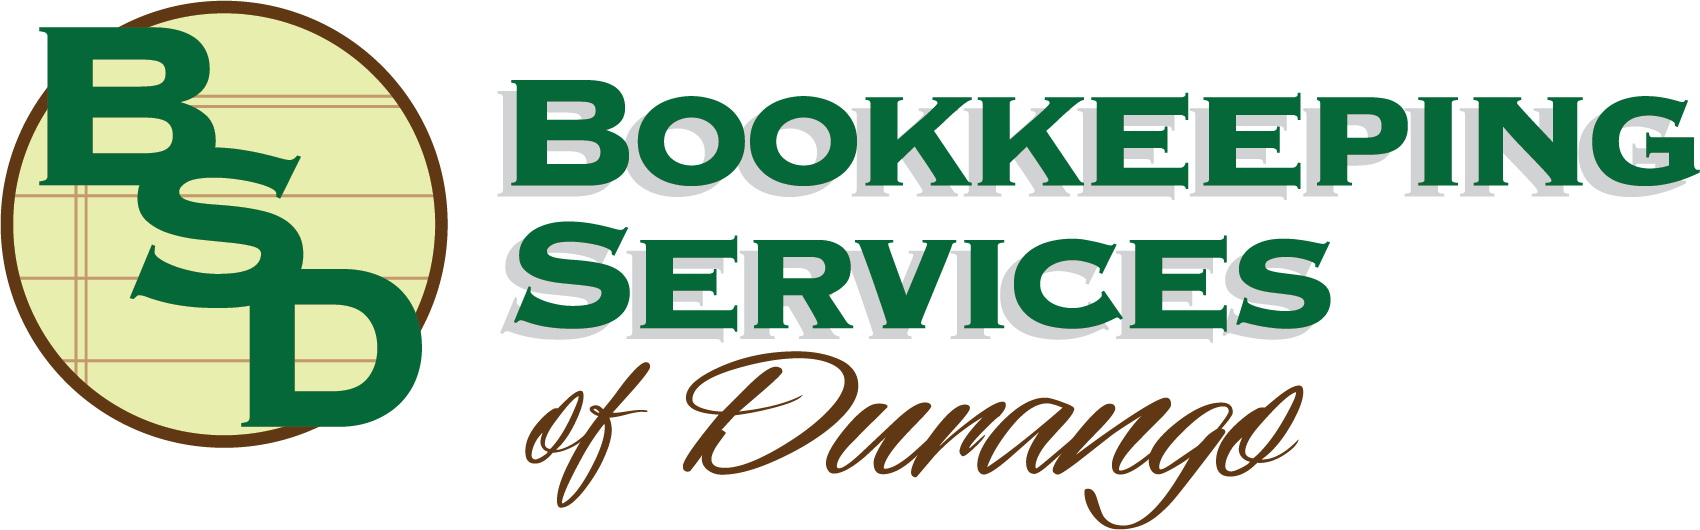 Bookkeeping Services of Durango Logo